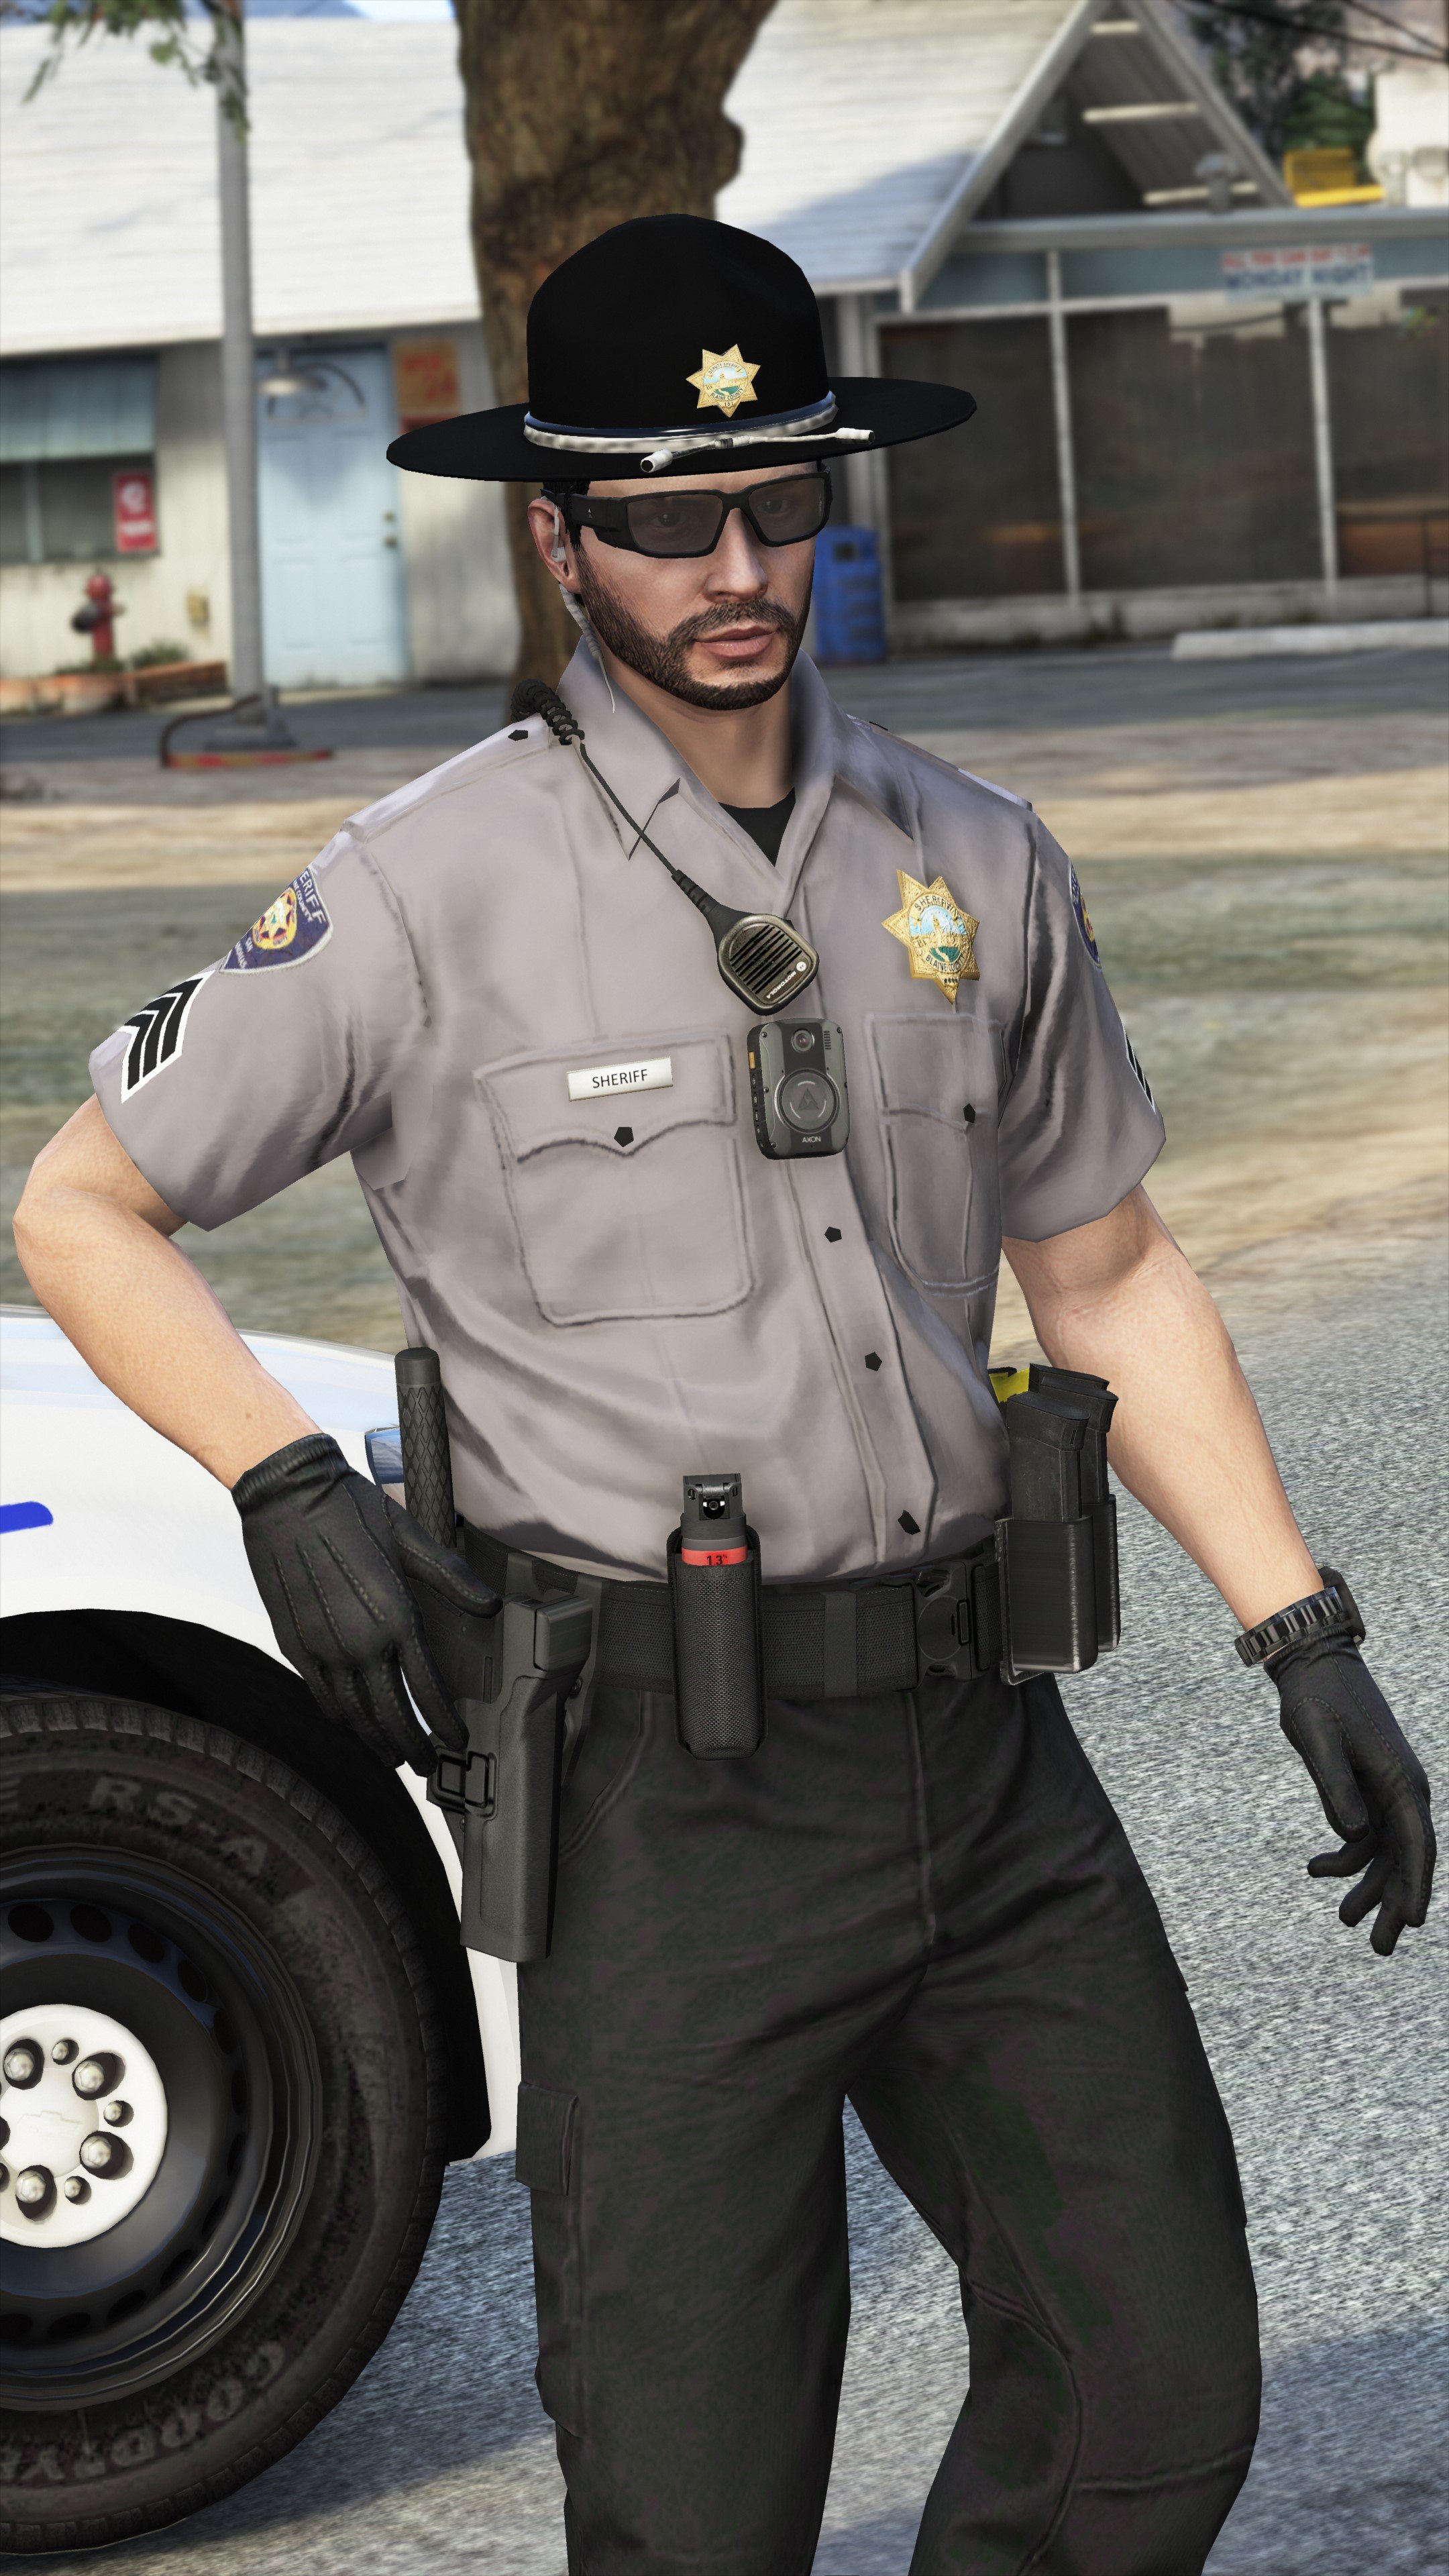 Gta Sheriff Uniform | vlr.eng.br